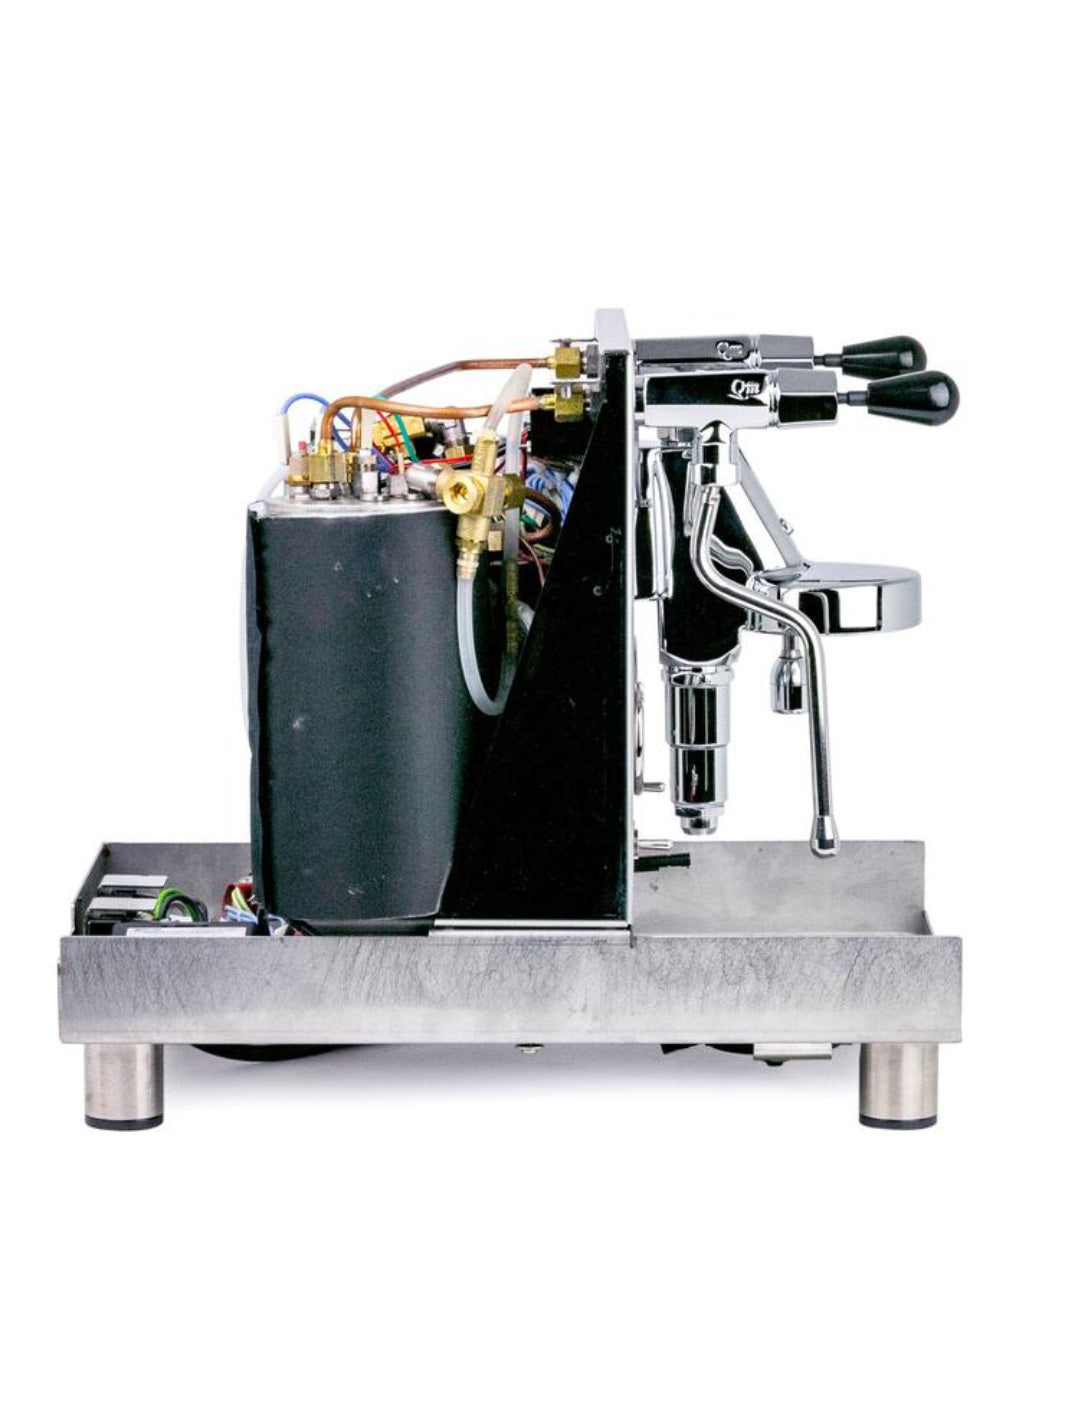 LUCCA M58 Dual Boiler Espresso Machine